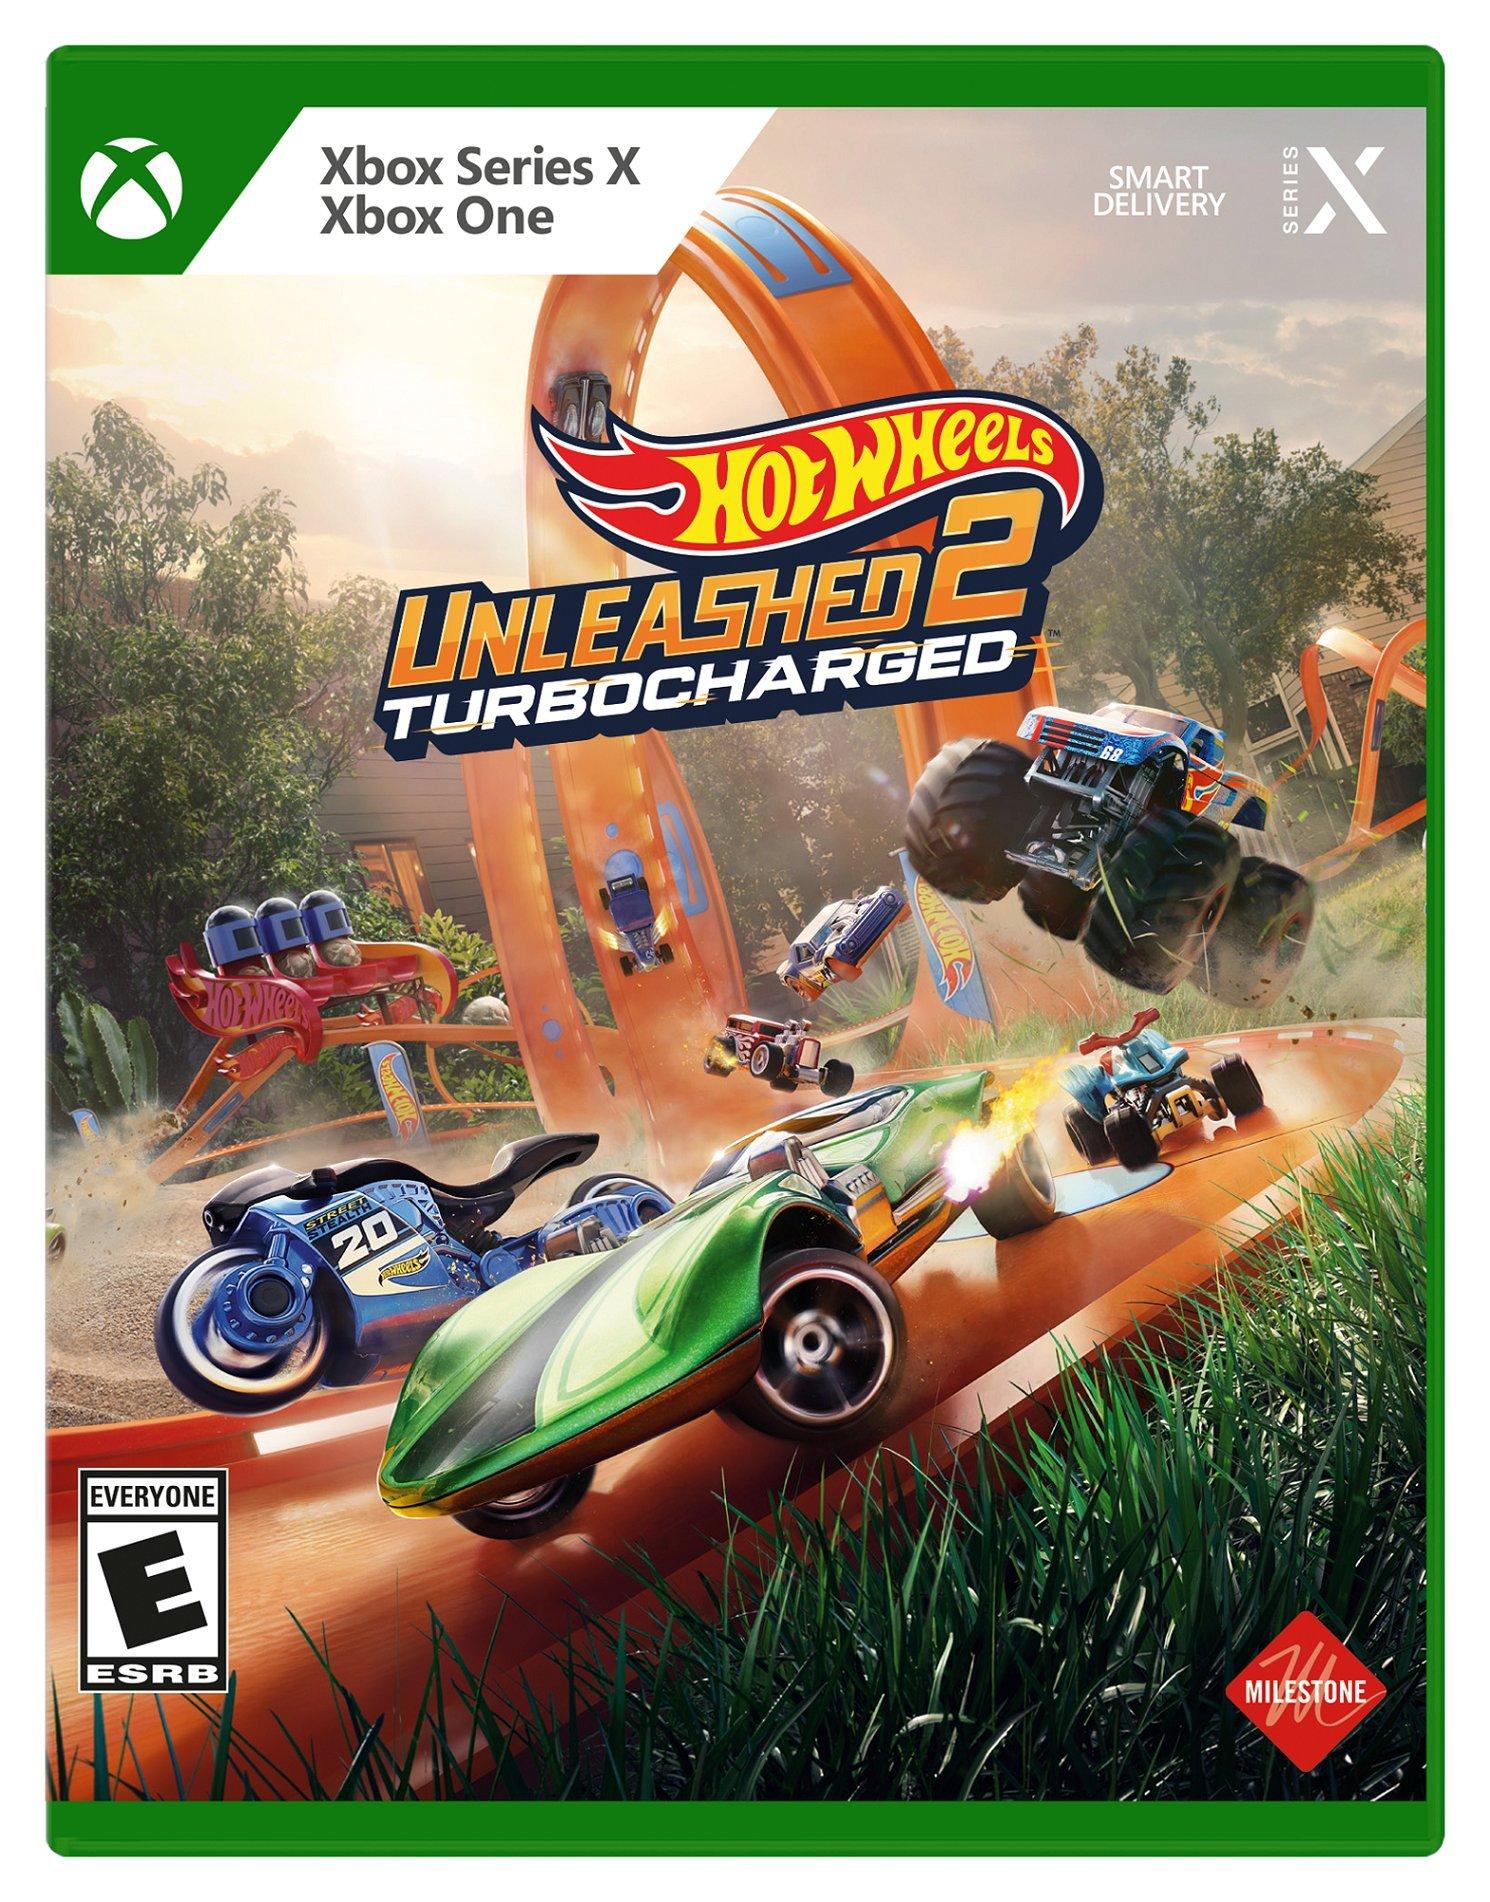 Xbox Series Wheels Xbox | Hot Xbox 2 X Unleashed - Turbocharged One GameStop Series | X,